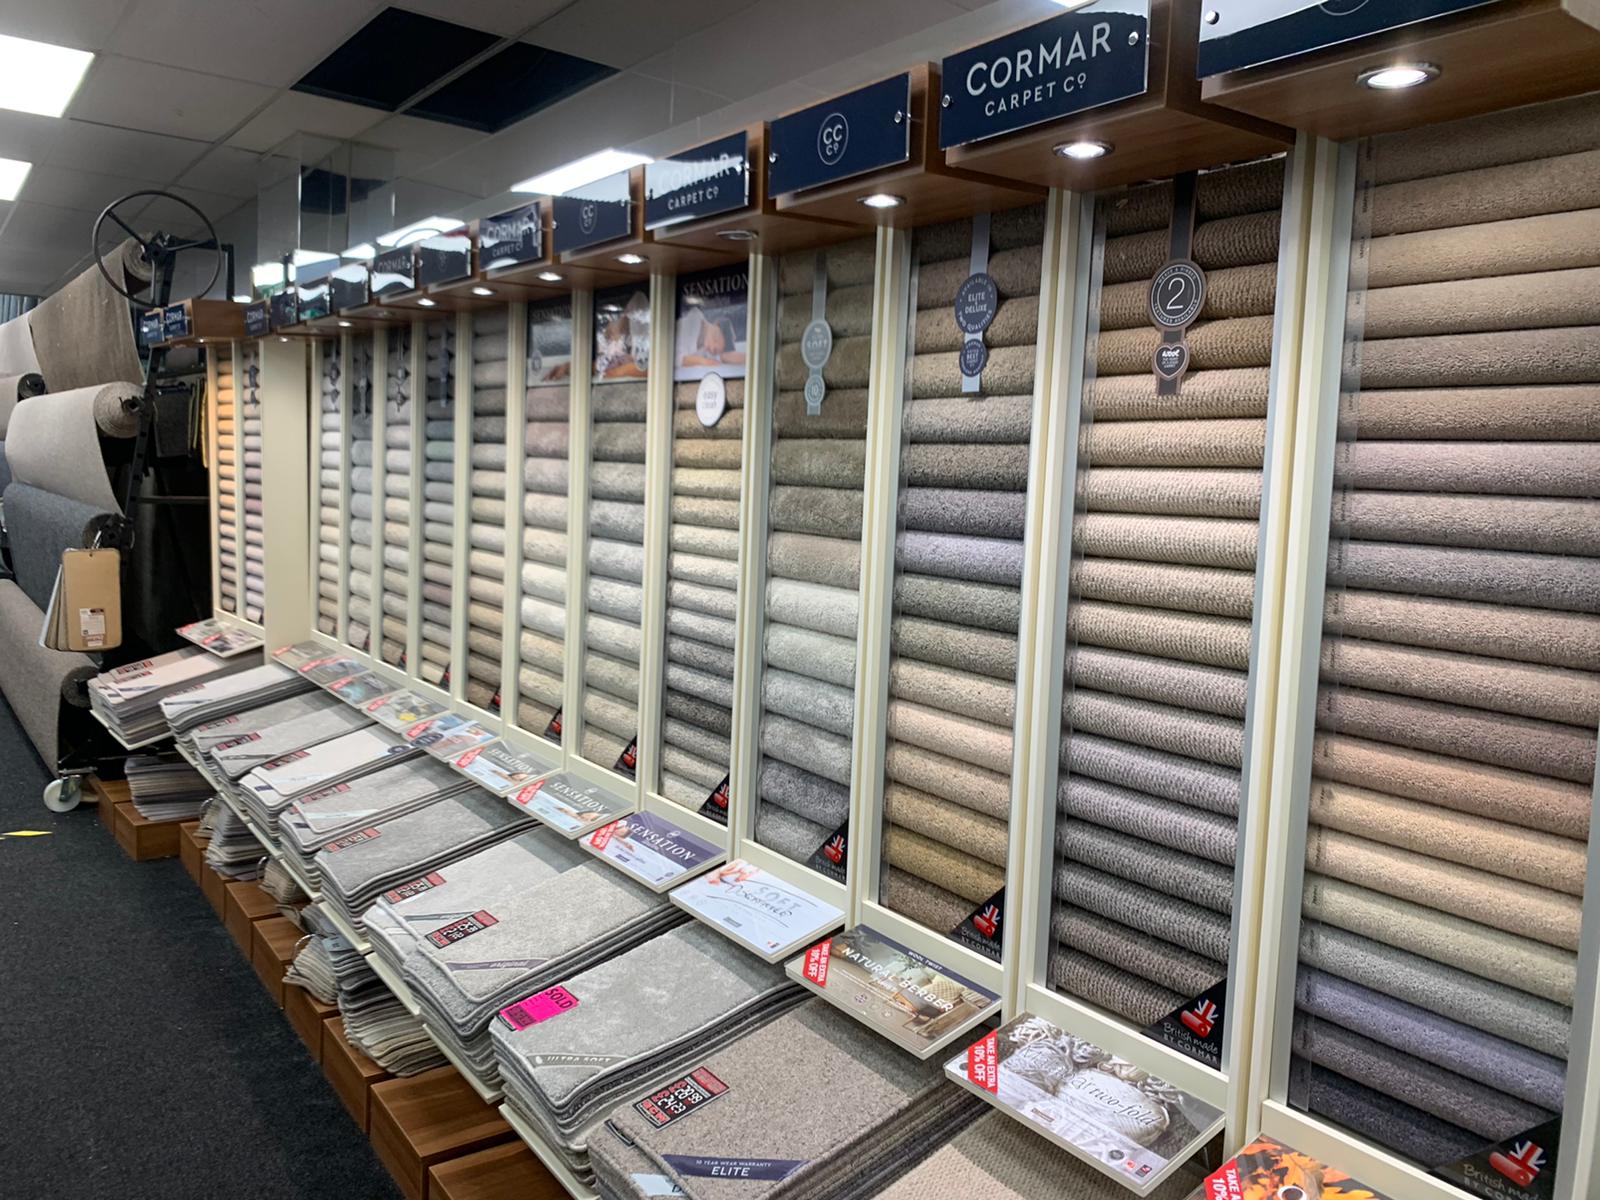 Default image for GCW – Grimsby Carpet Warehouse